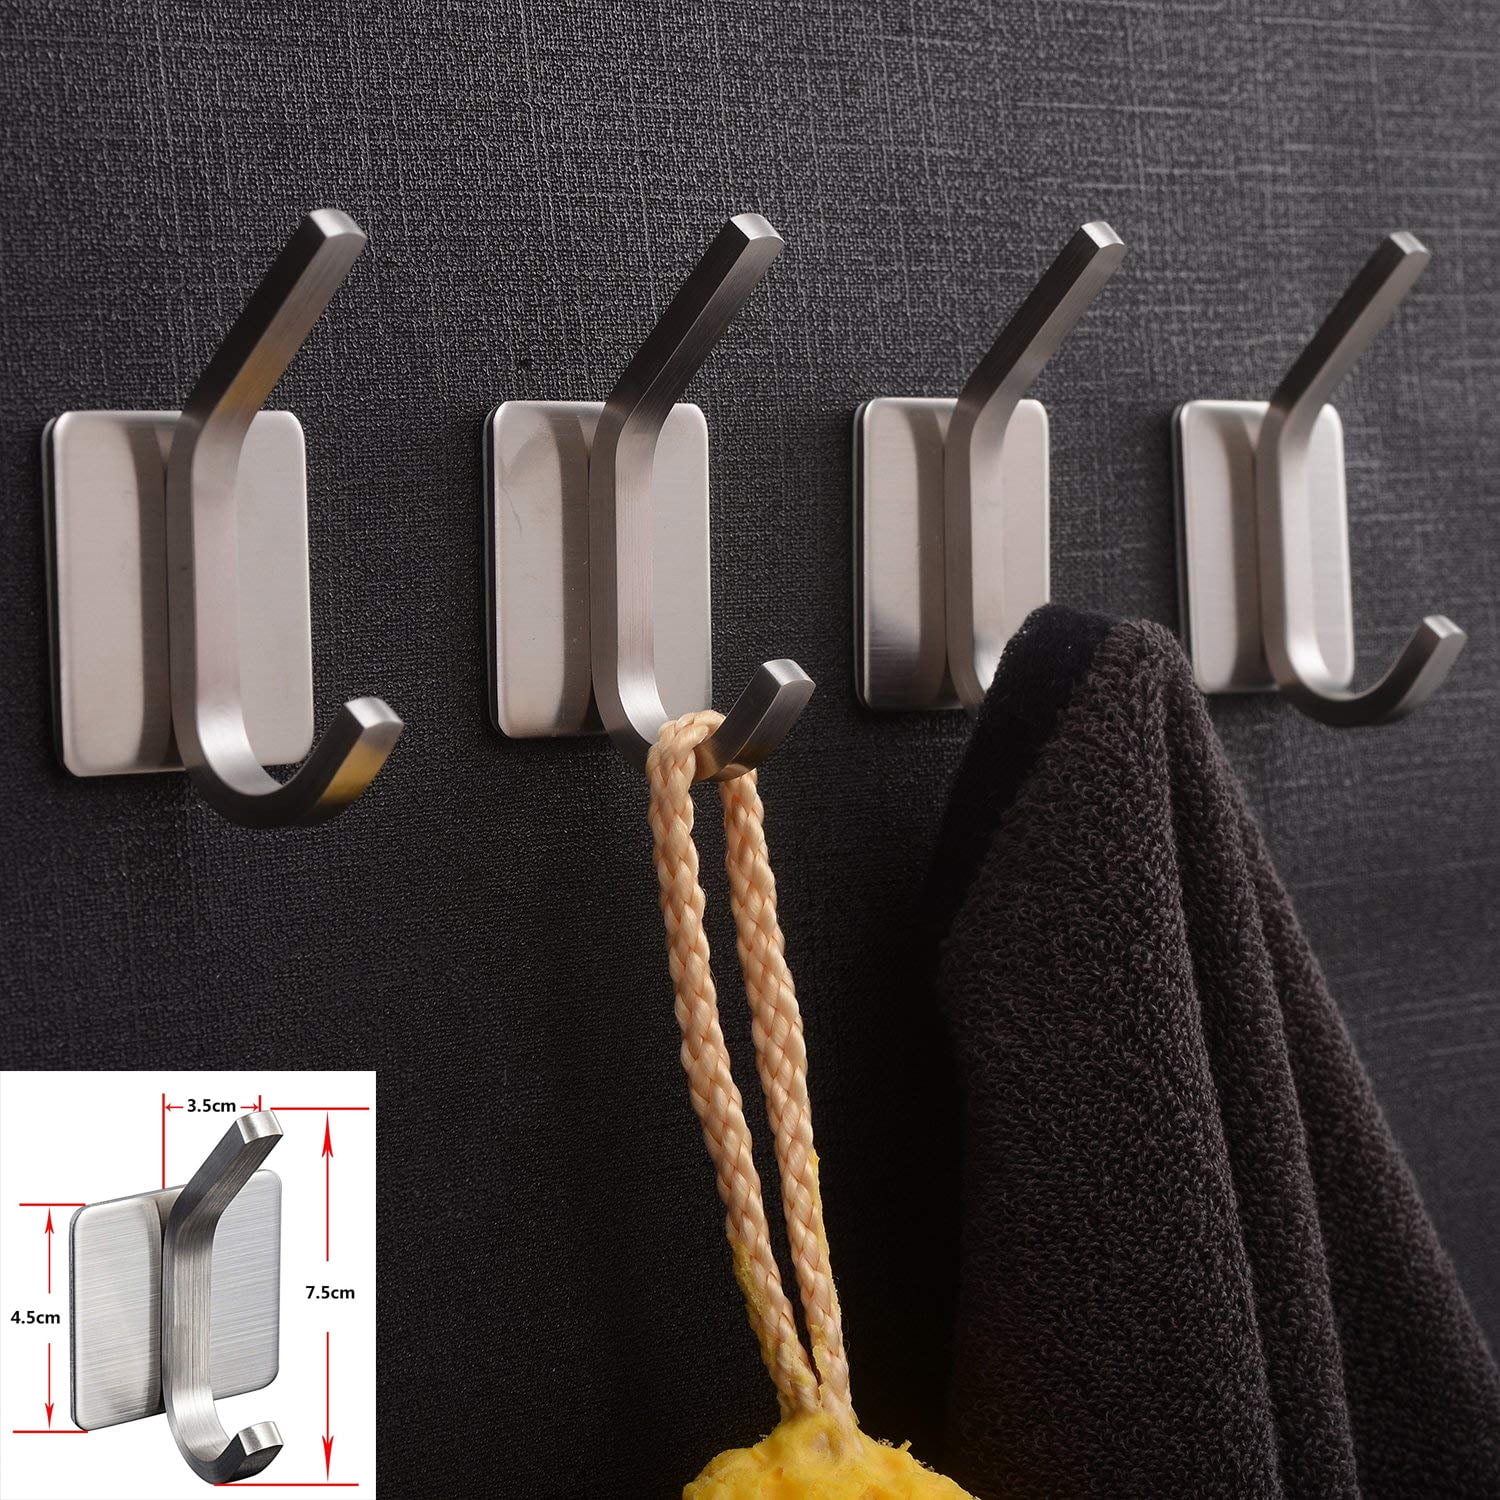 6 Packs Wodgreat Adhesive Hanging Hooks Heavy Duty Wall Hooks Waterproof Stainless Steel Utility Hooks for Robe Towel Keys Bags Home Kitchen Bathroom Office